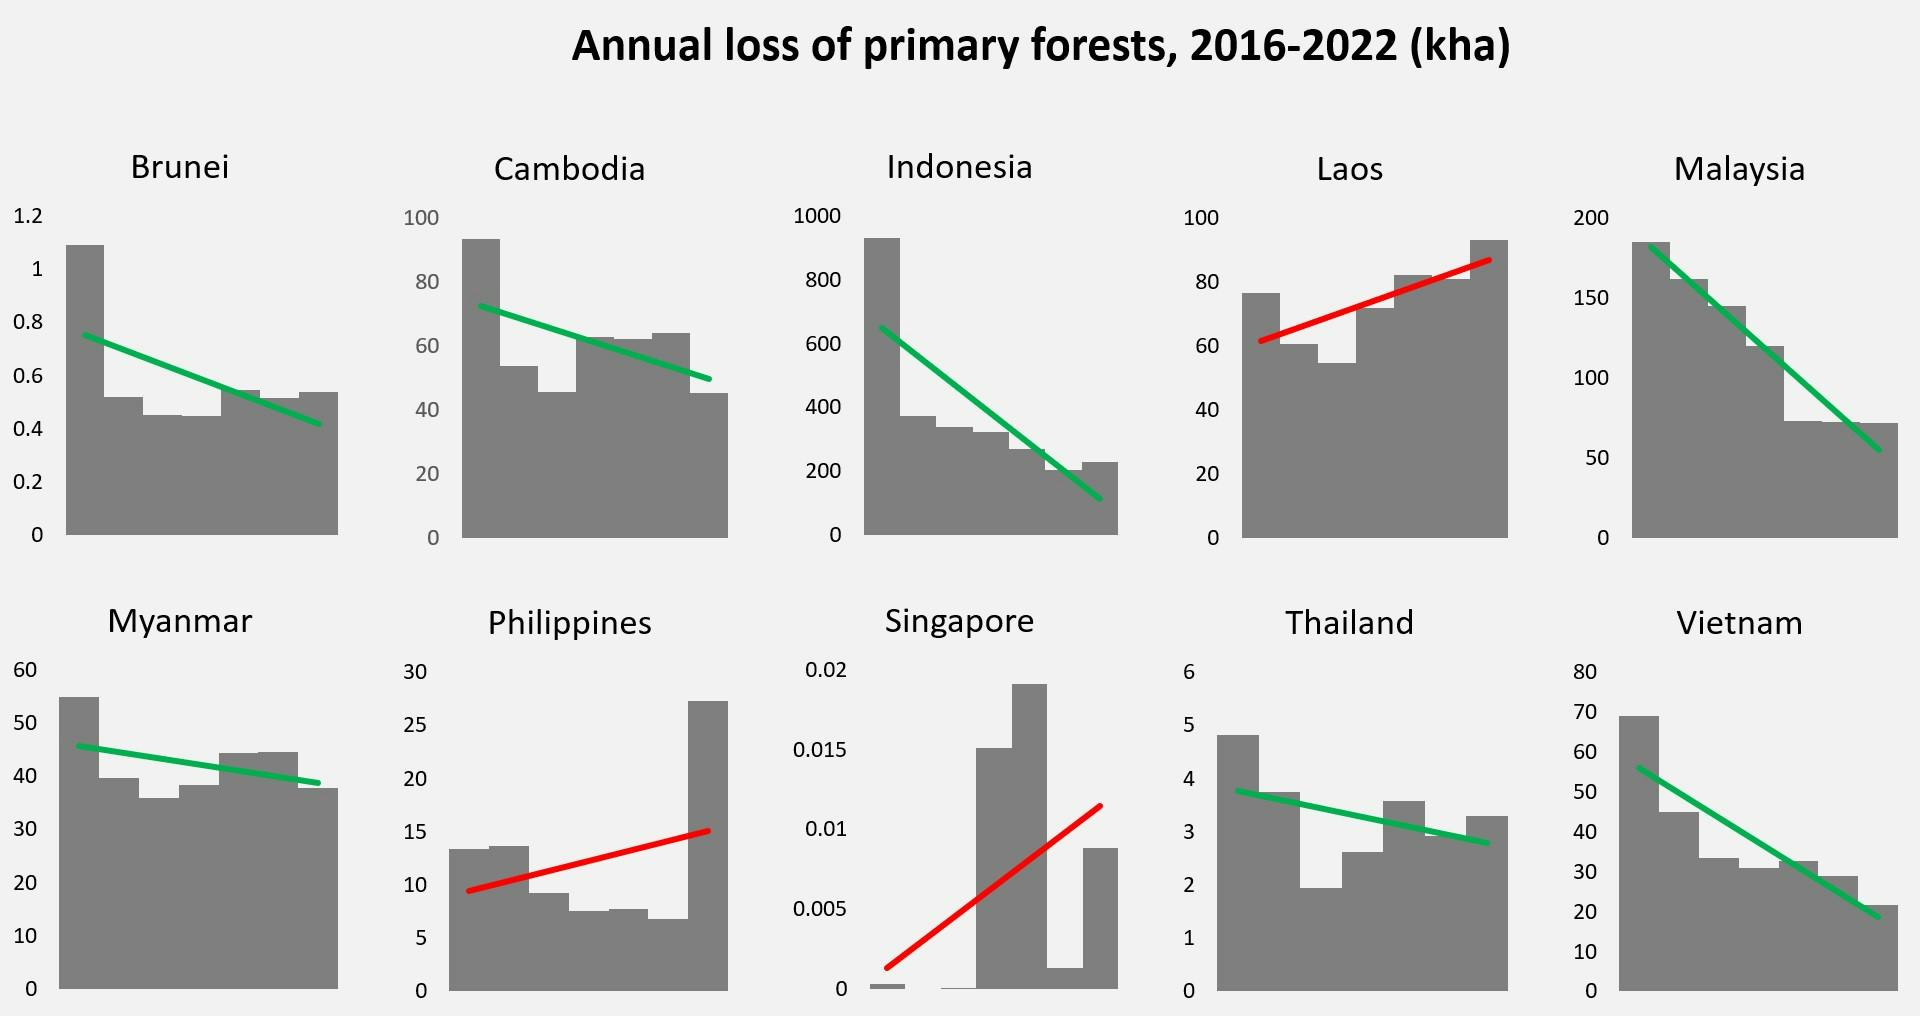 annual loss of pri forests 2016-2022